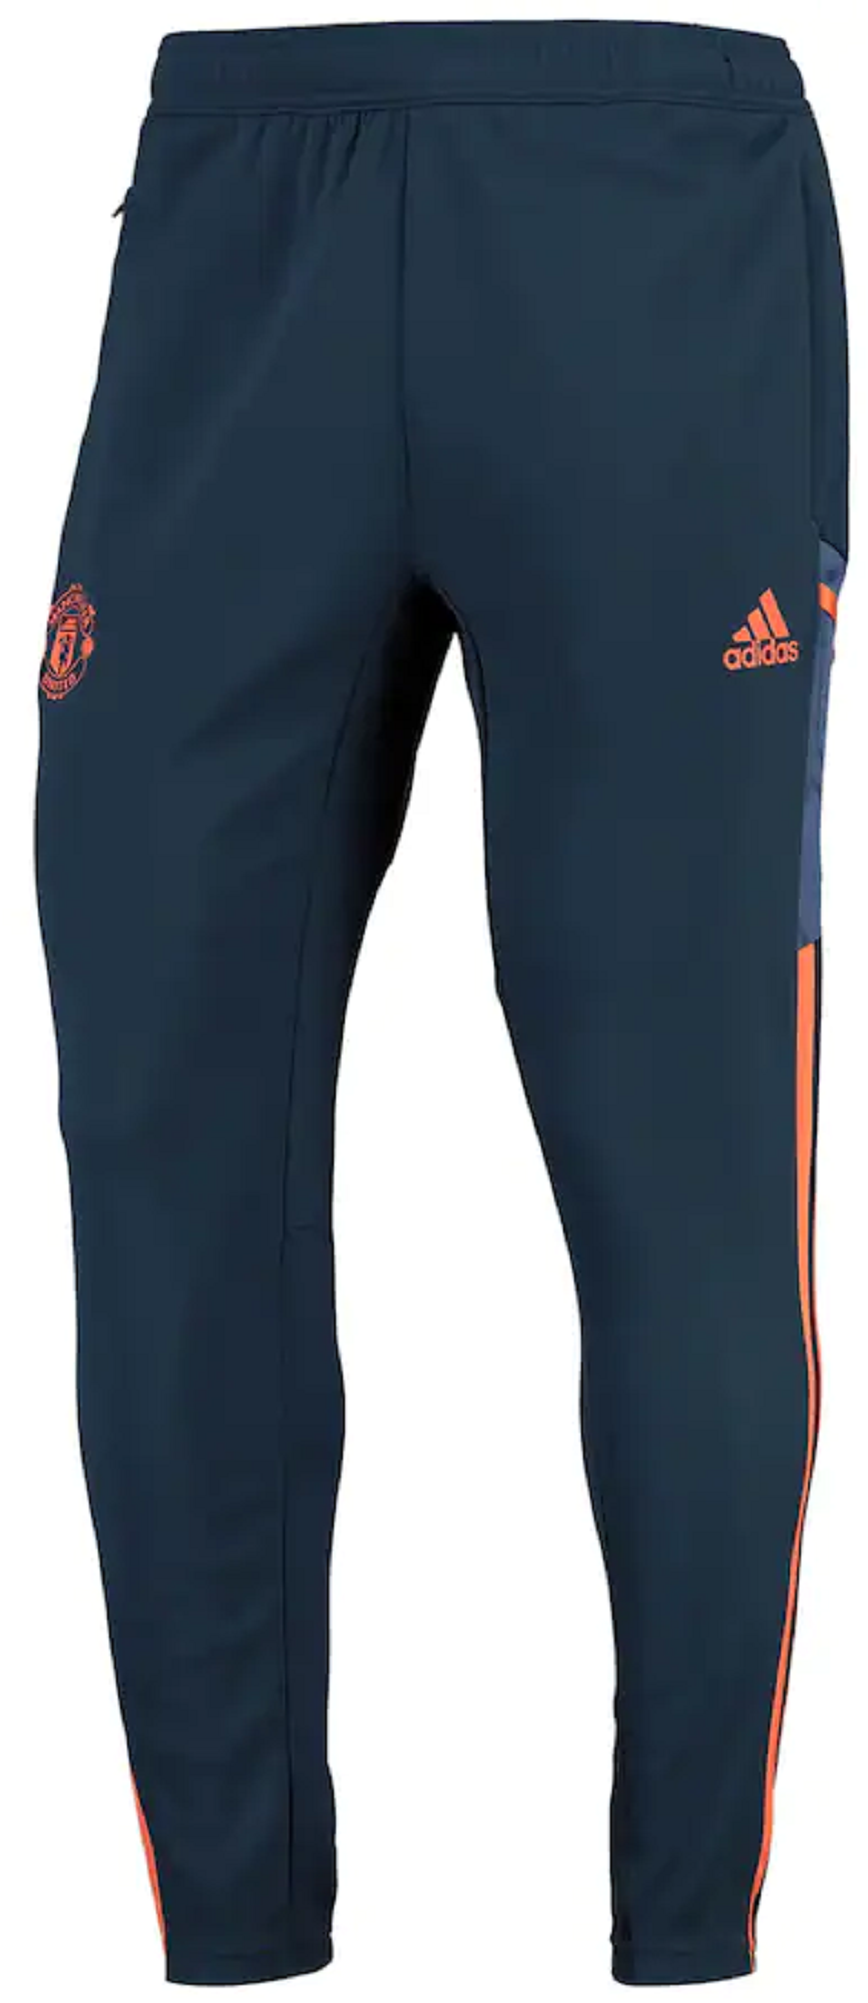 adidas Manchester United Training Pants Youth - Man Utd Track Bottoms All  Sizes | eBay